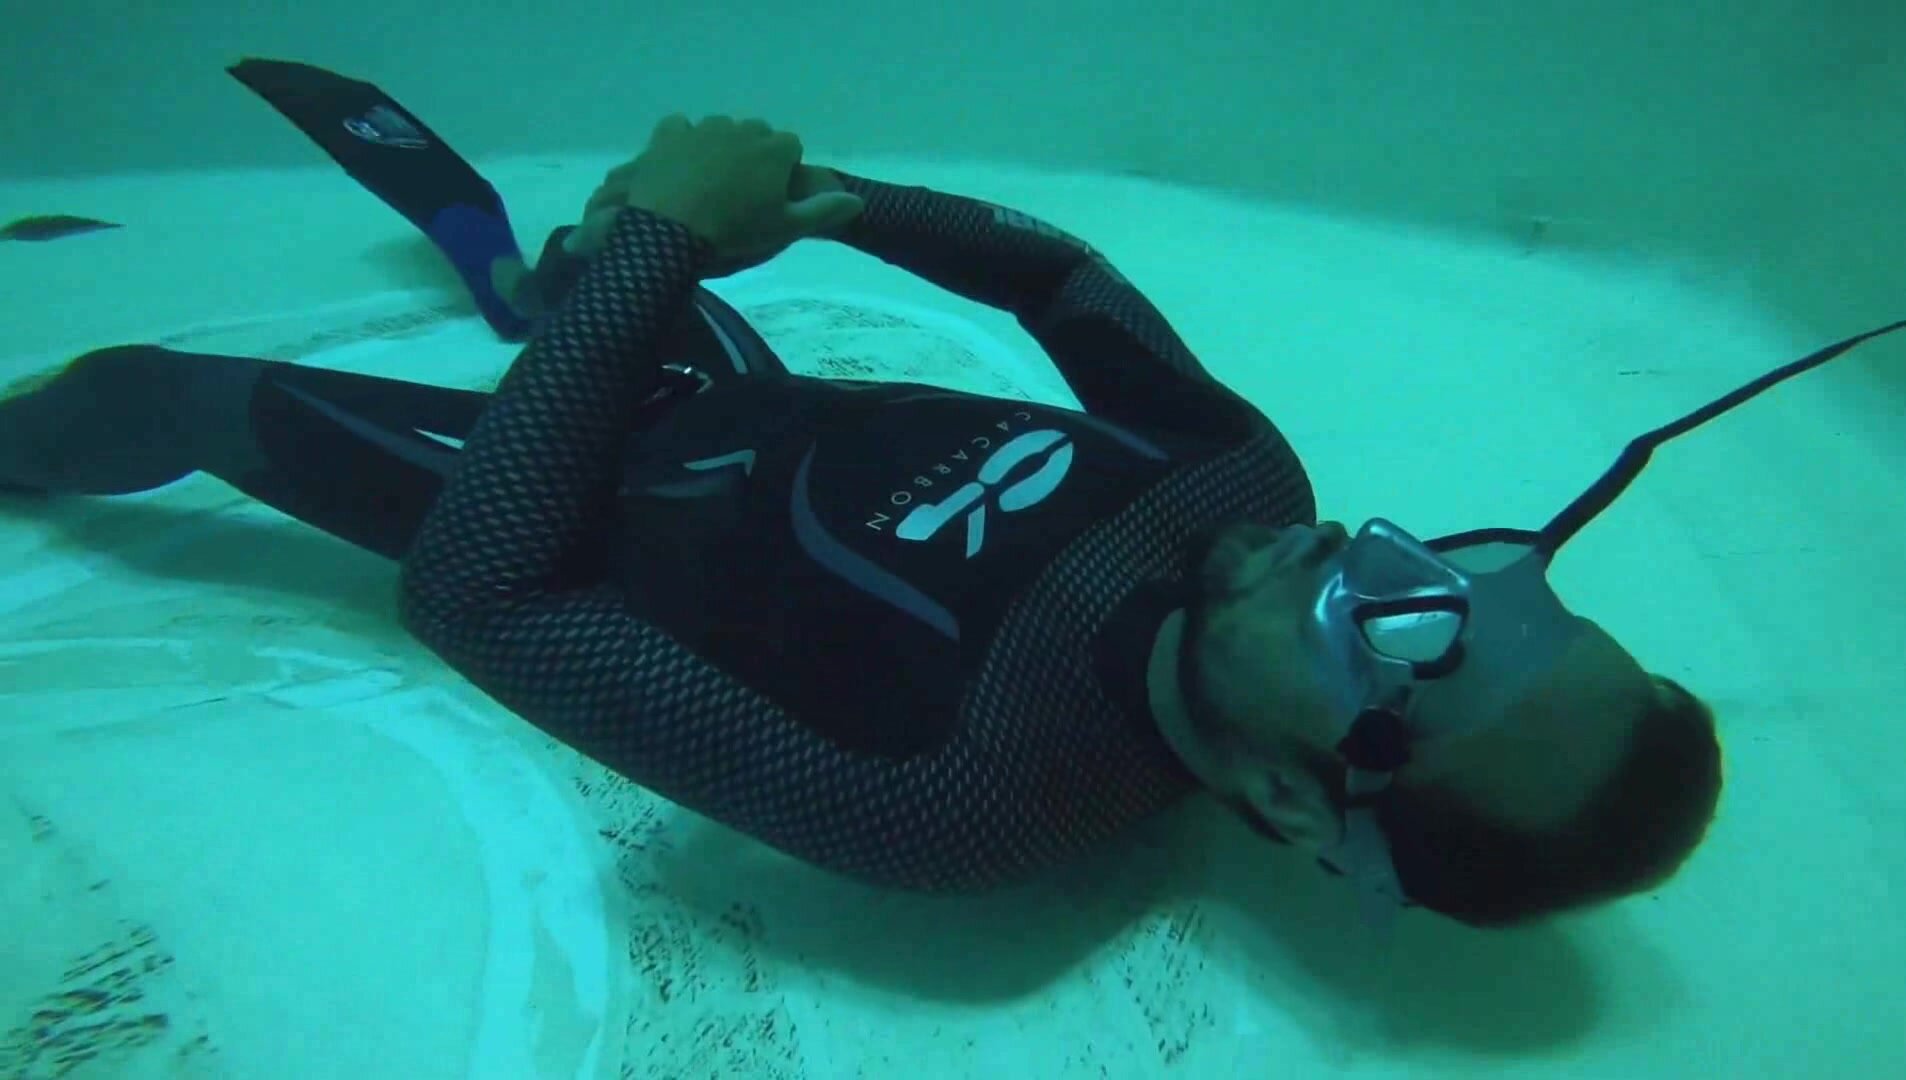 French freediver deep underwater in wetsuit